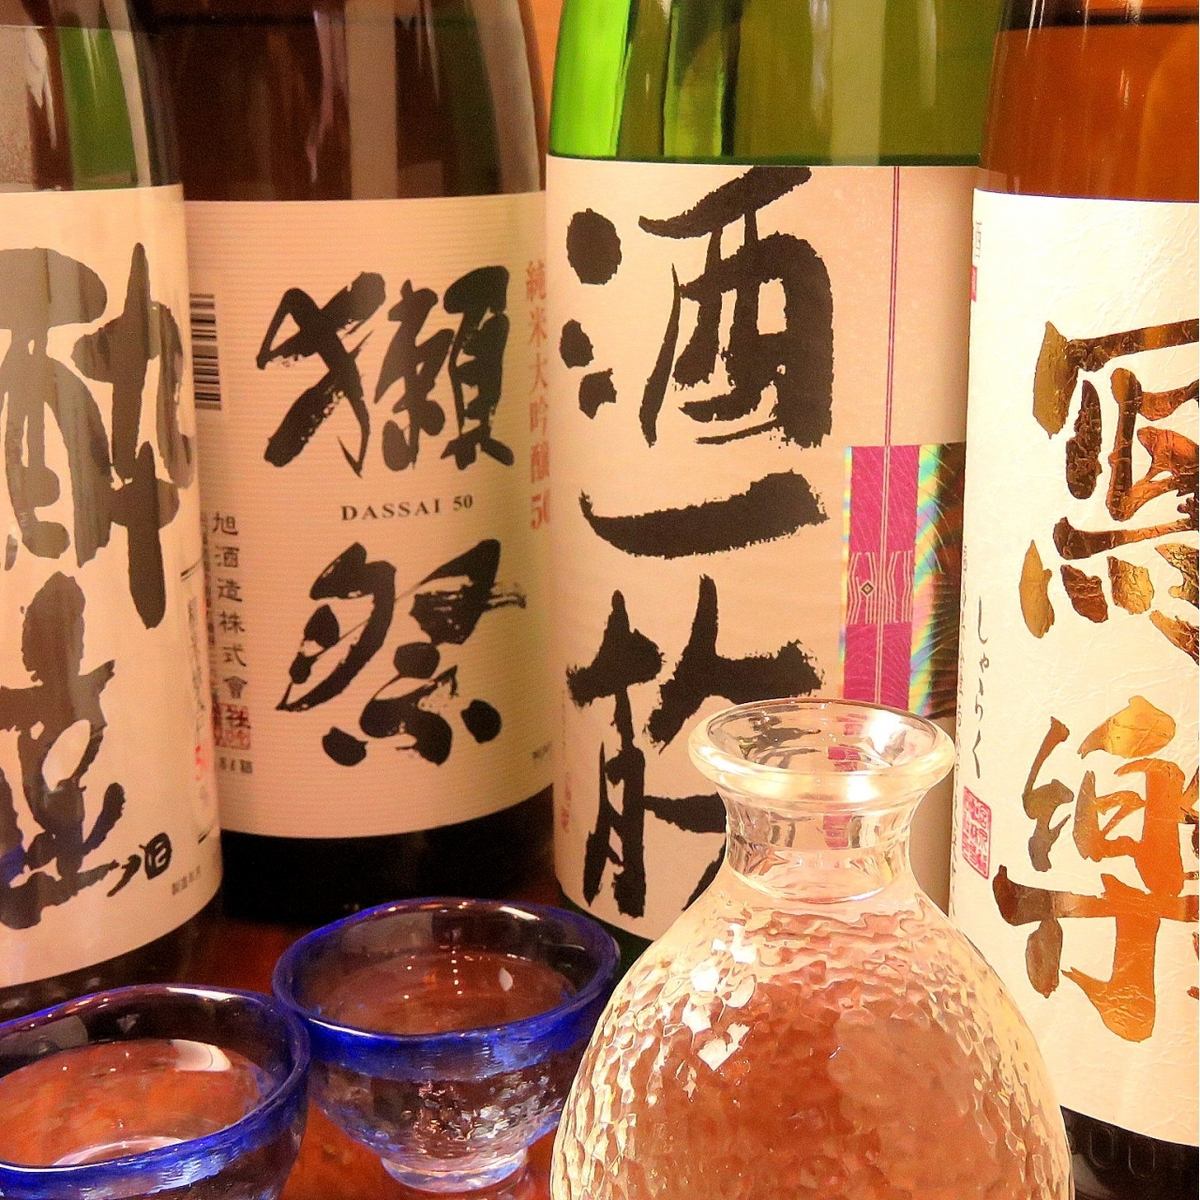 We offer a wide variety of premium sake and local sake.